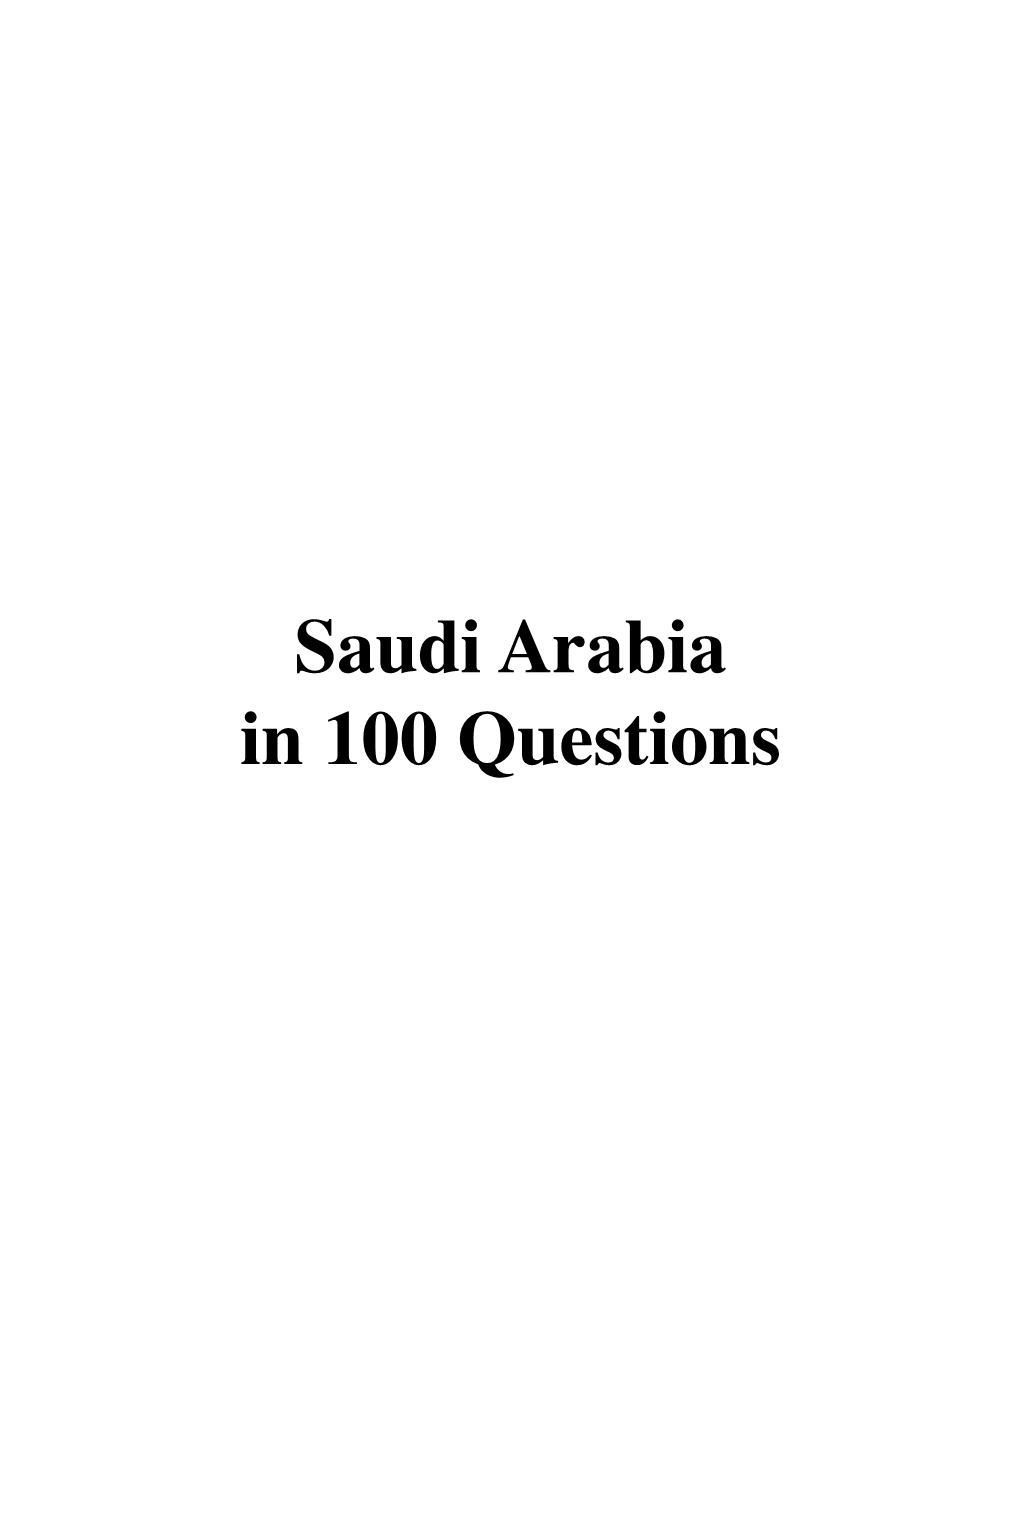 Saudi Arabia in 100 Questions